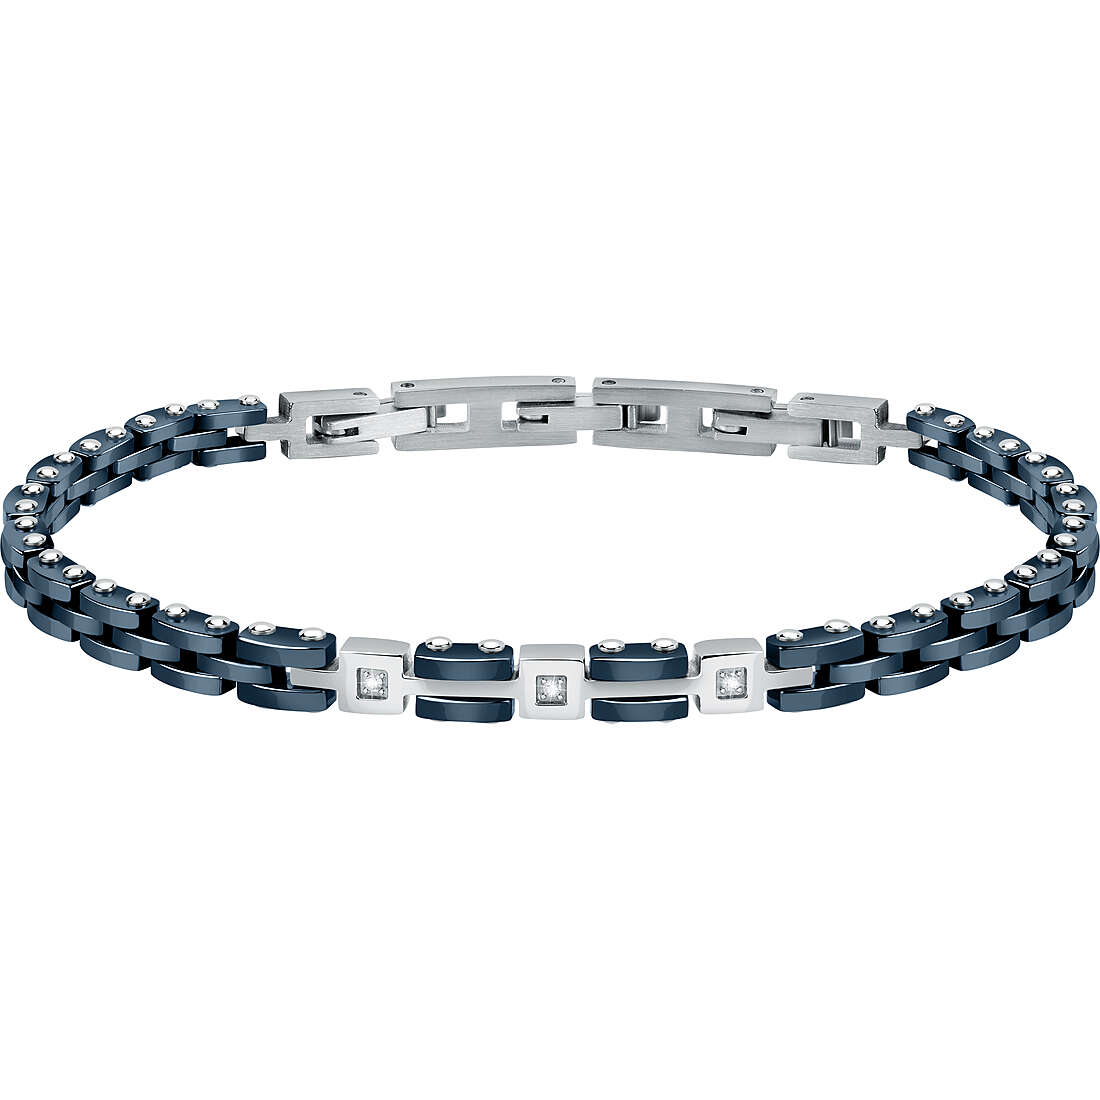 bracelet man jewellery Morellato Diamonds SAUK04